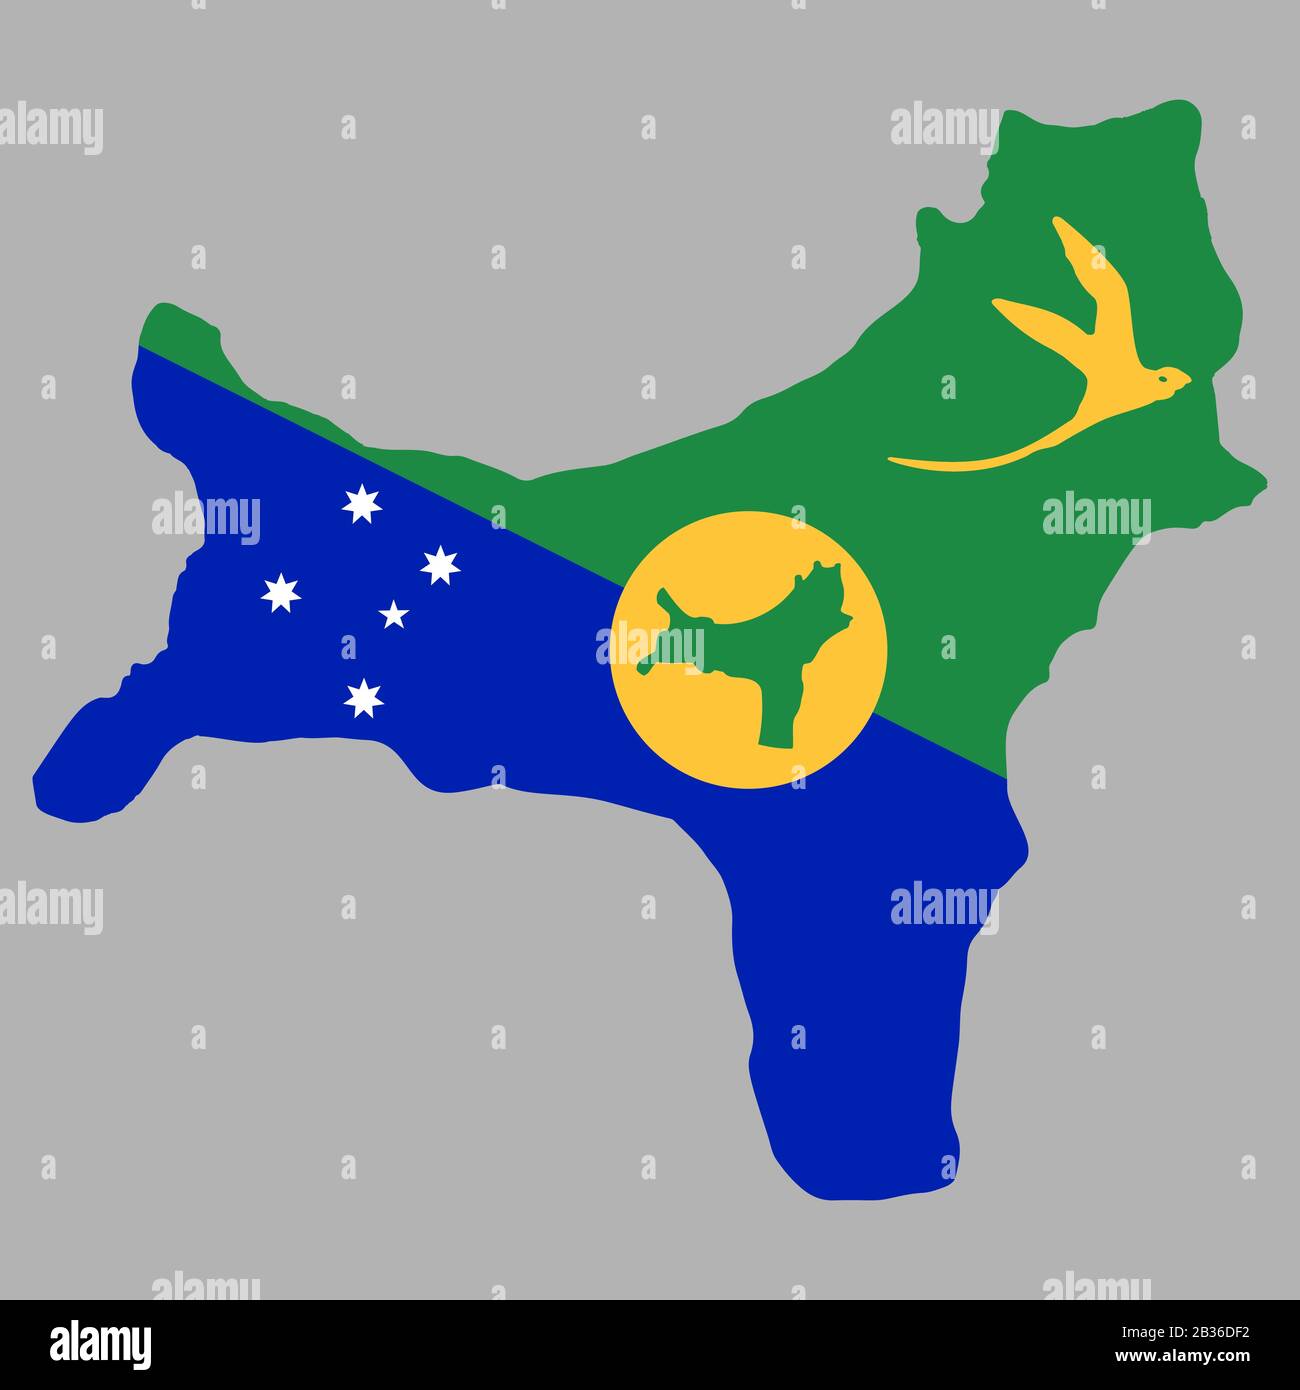 Christmas island map flag vector Stock Vector